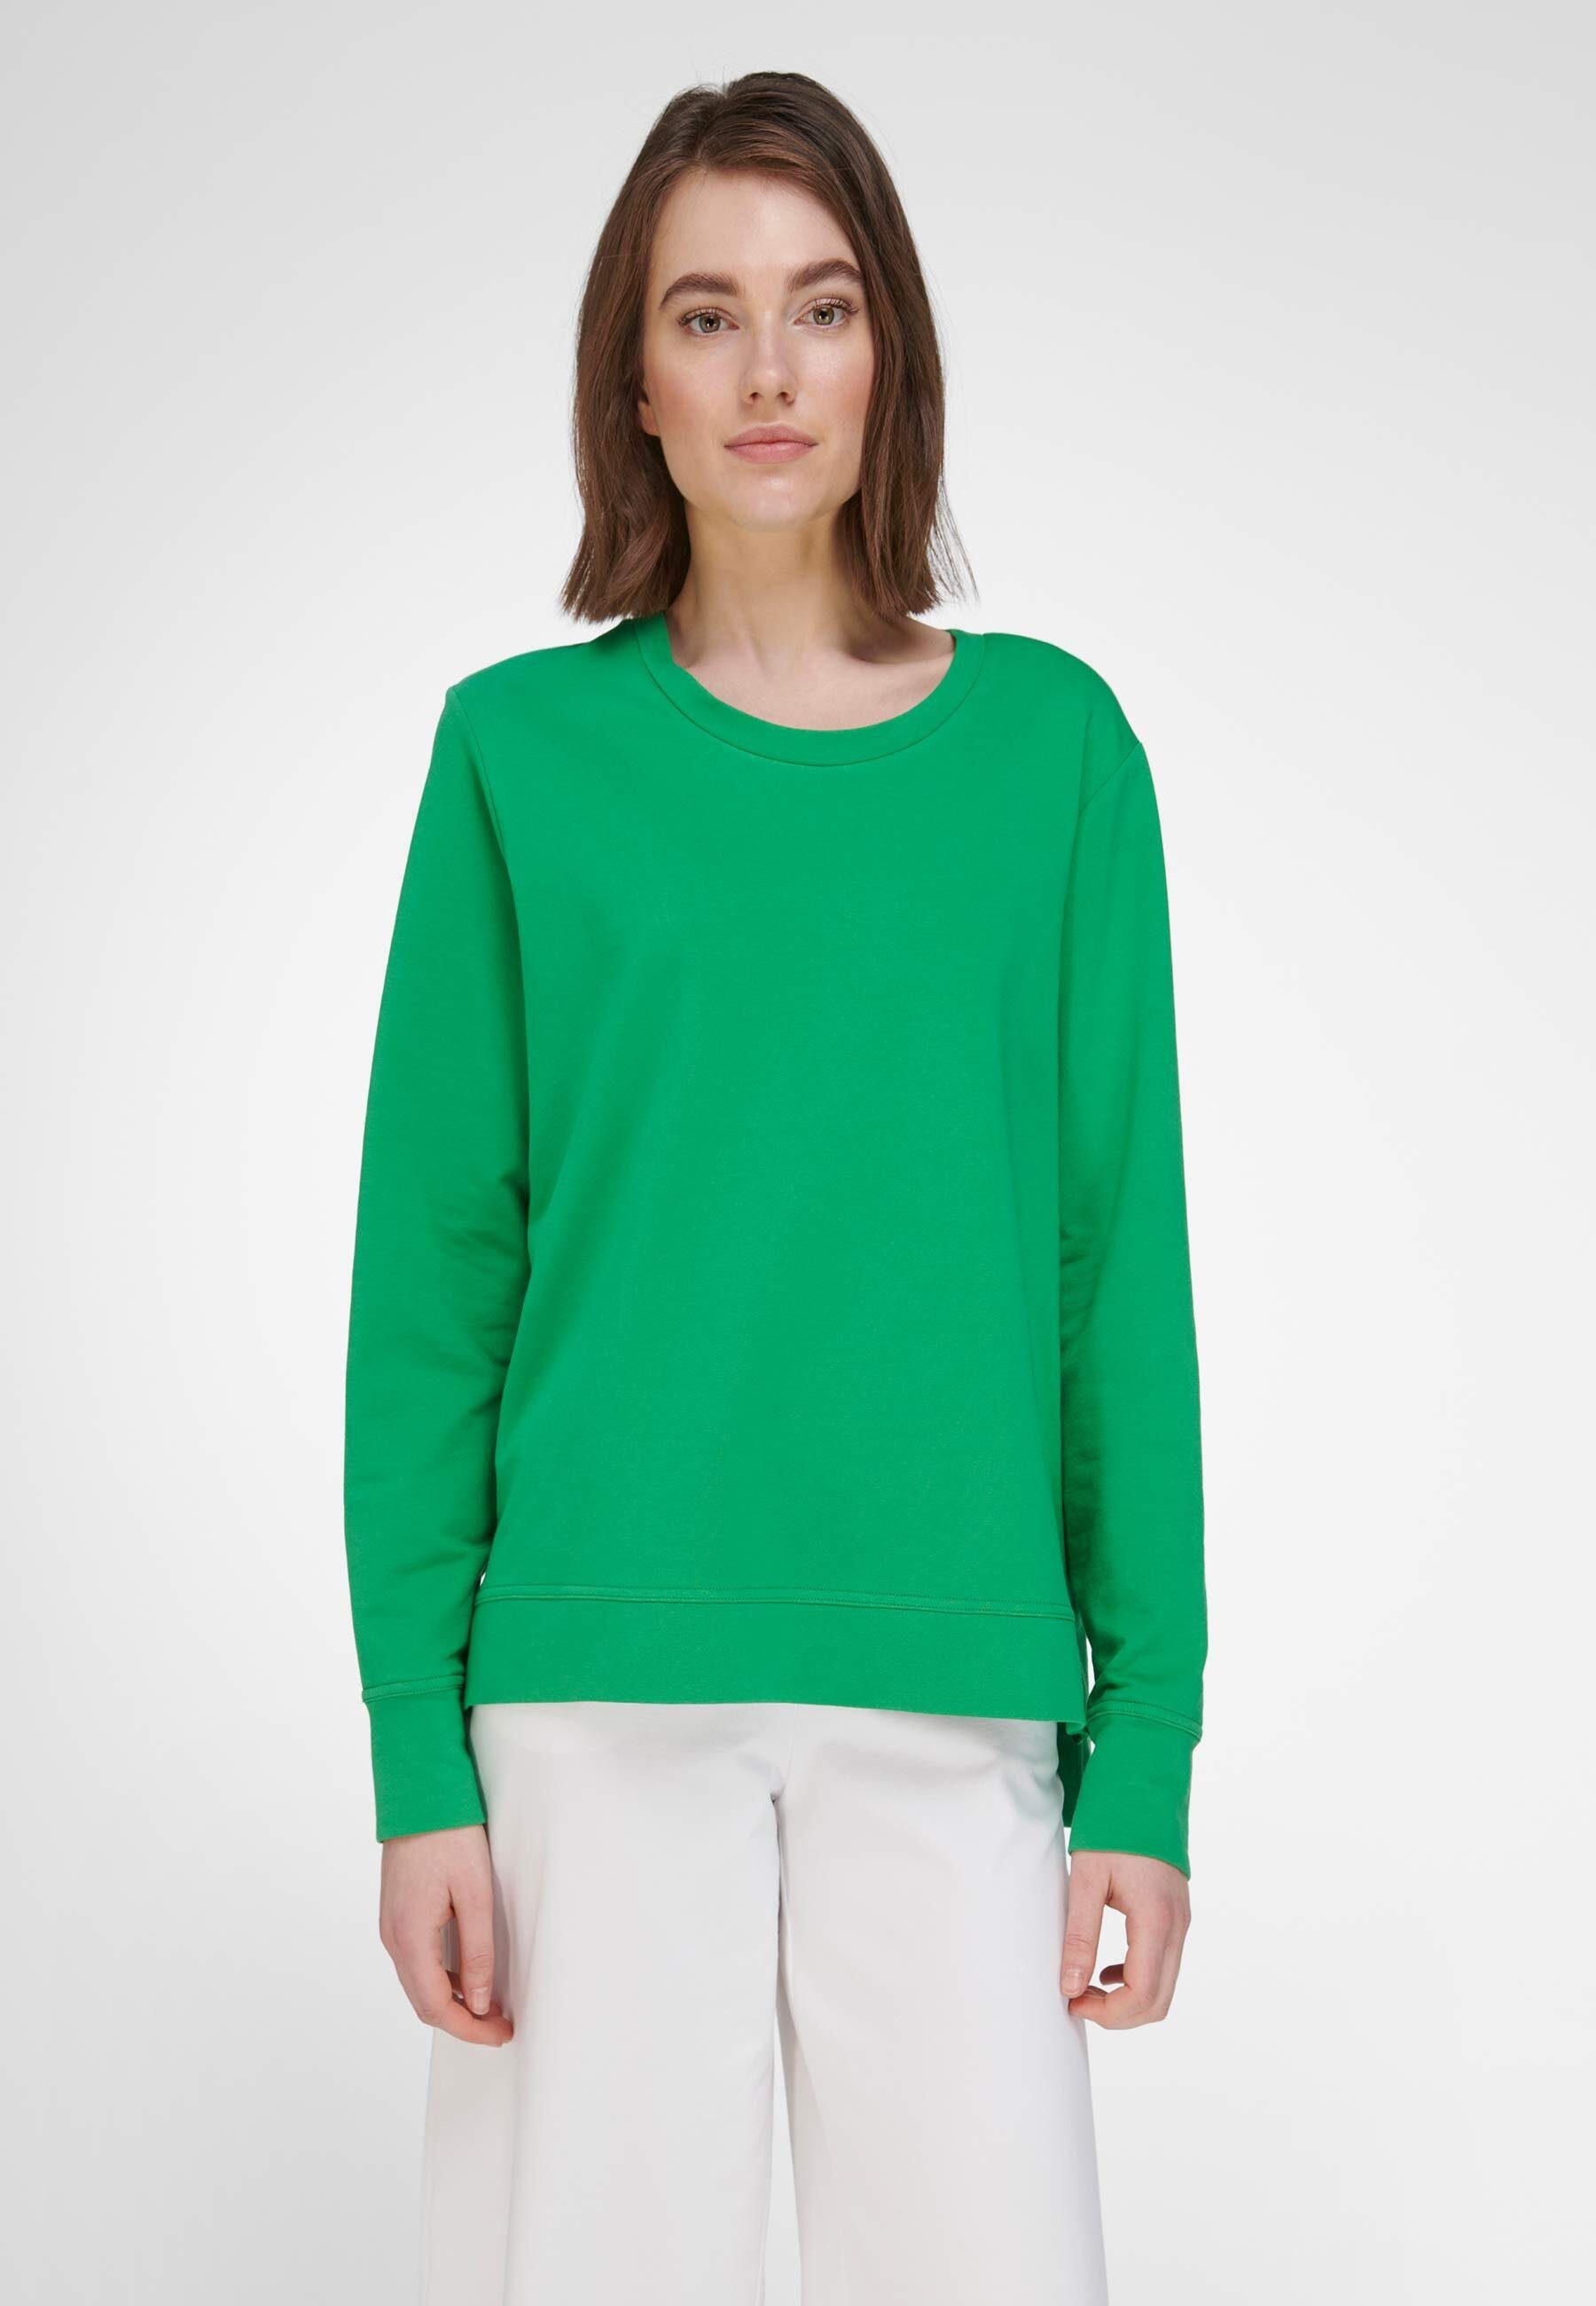 Peter Hahn Sweatshirt cotton